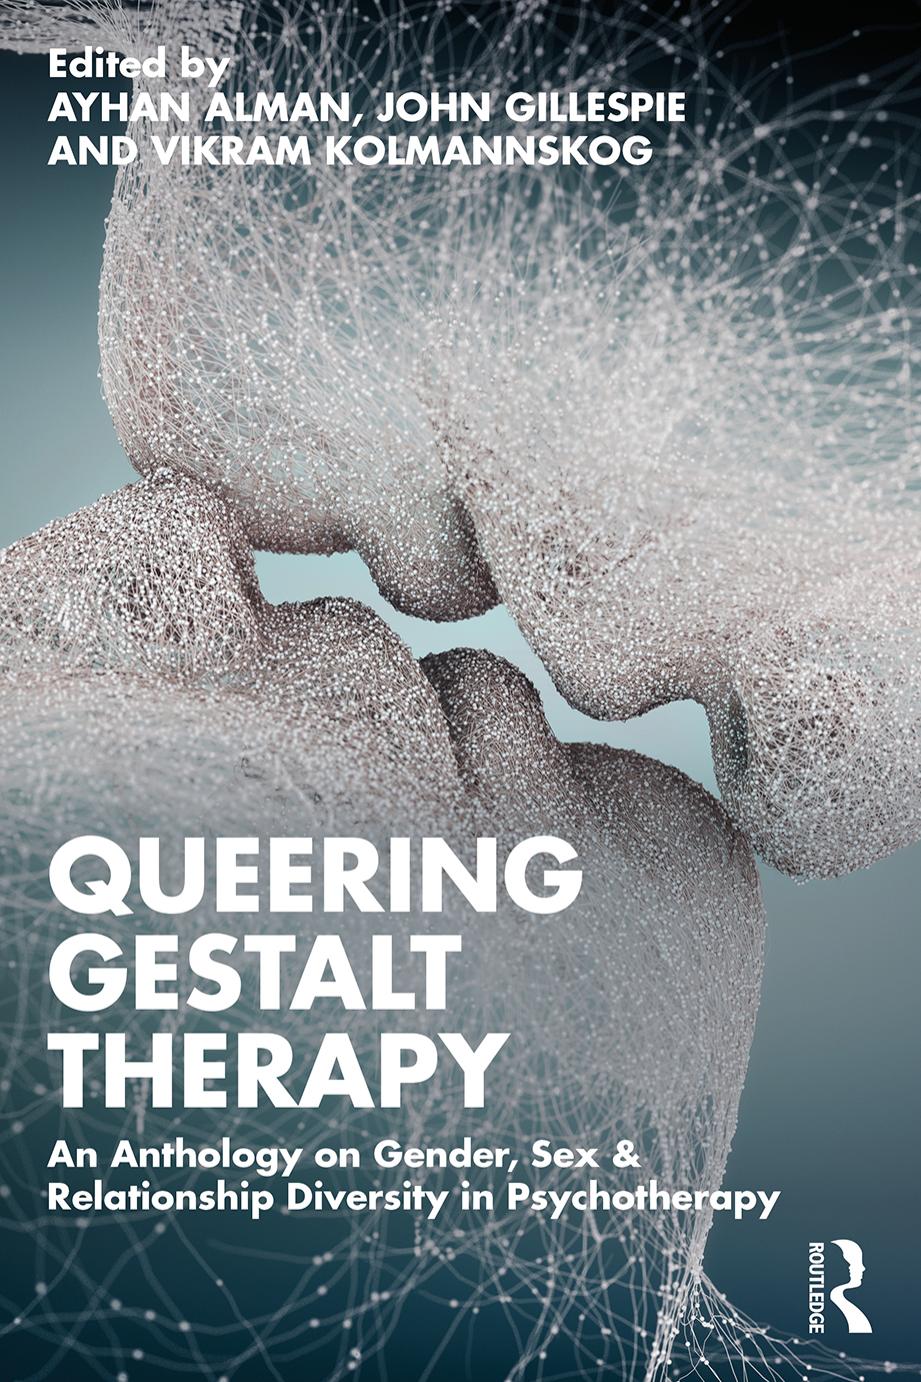 Queering Gestalt Therapy: An Anthology on Gender, Sex & Relationship Diversity in Psychotherapy by Ayhan Alman John Gillespie Vikram Kolmannskog